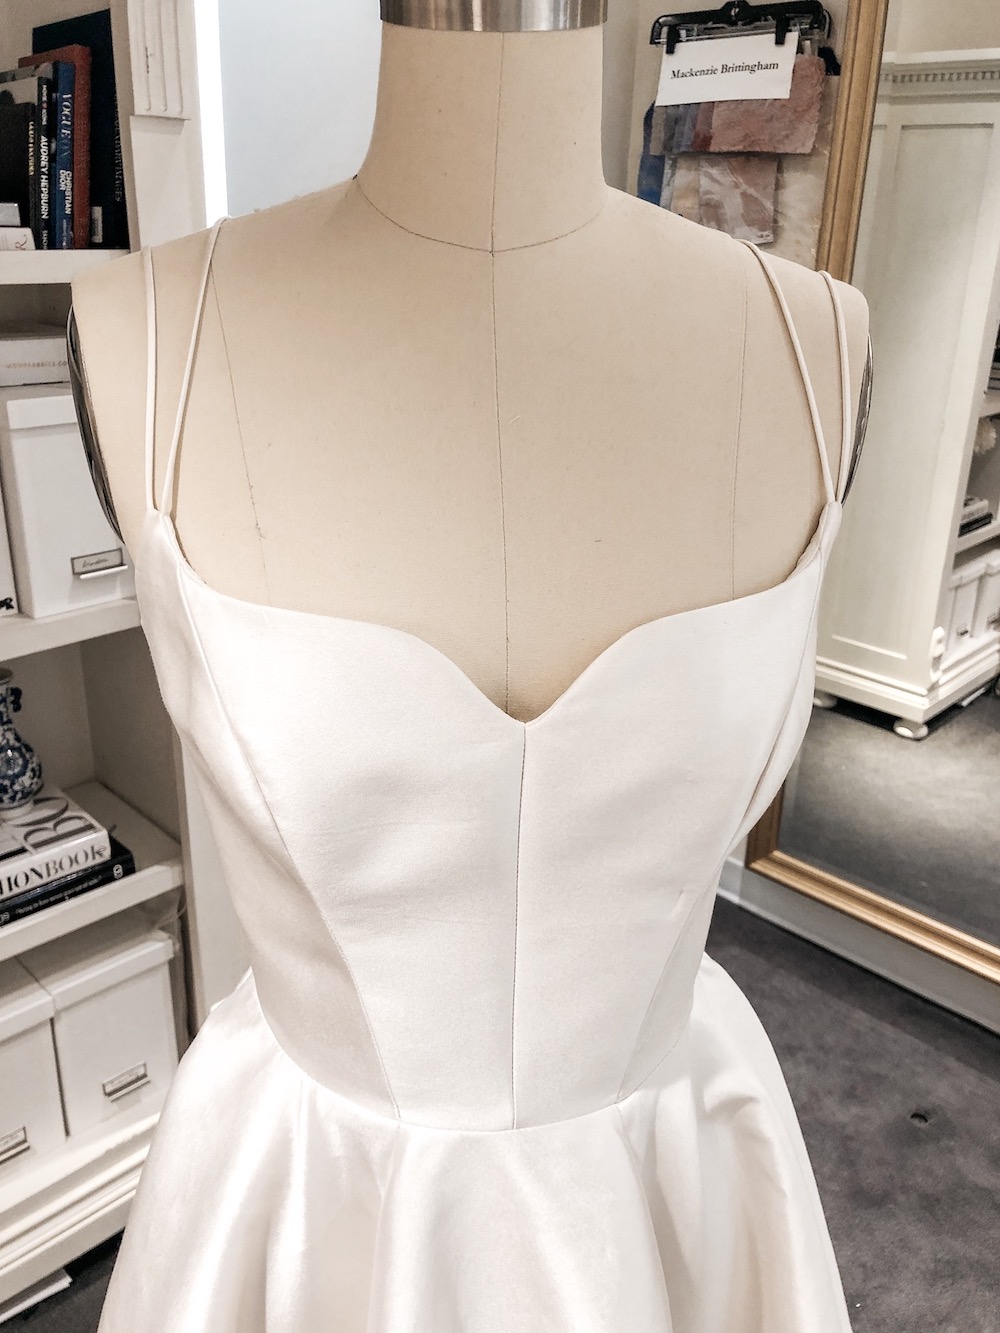 brighton keller reception dress design process mackenzie brittingham custom dress neckline inspiration